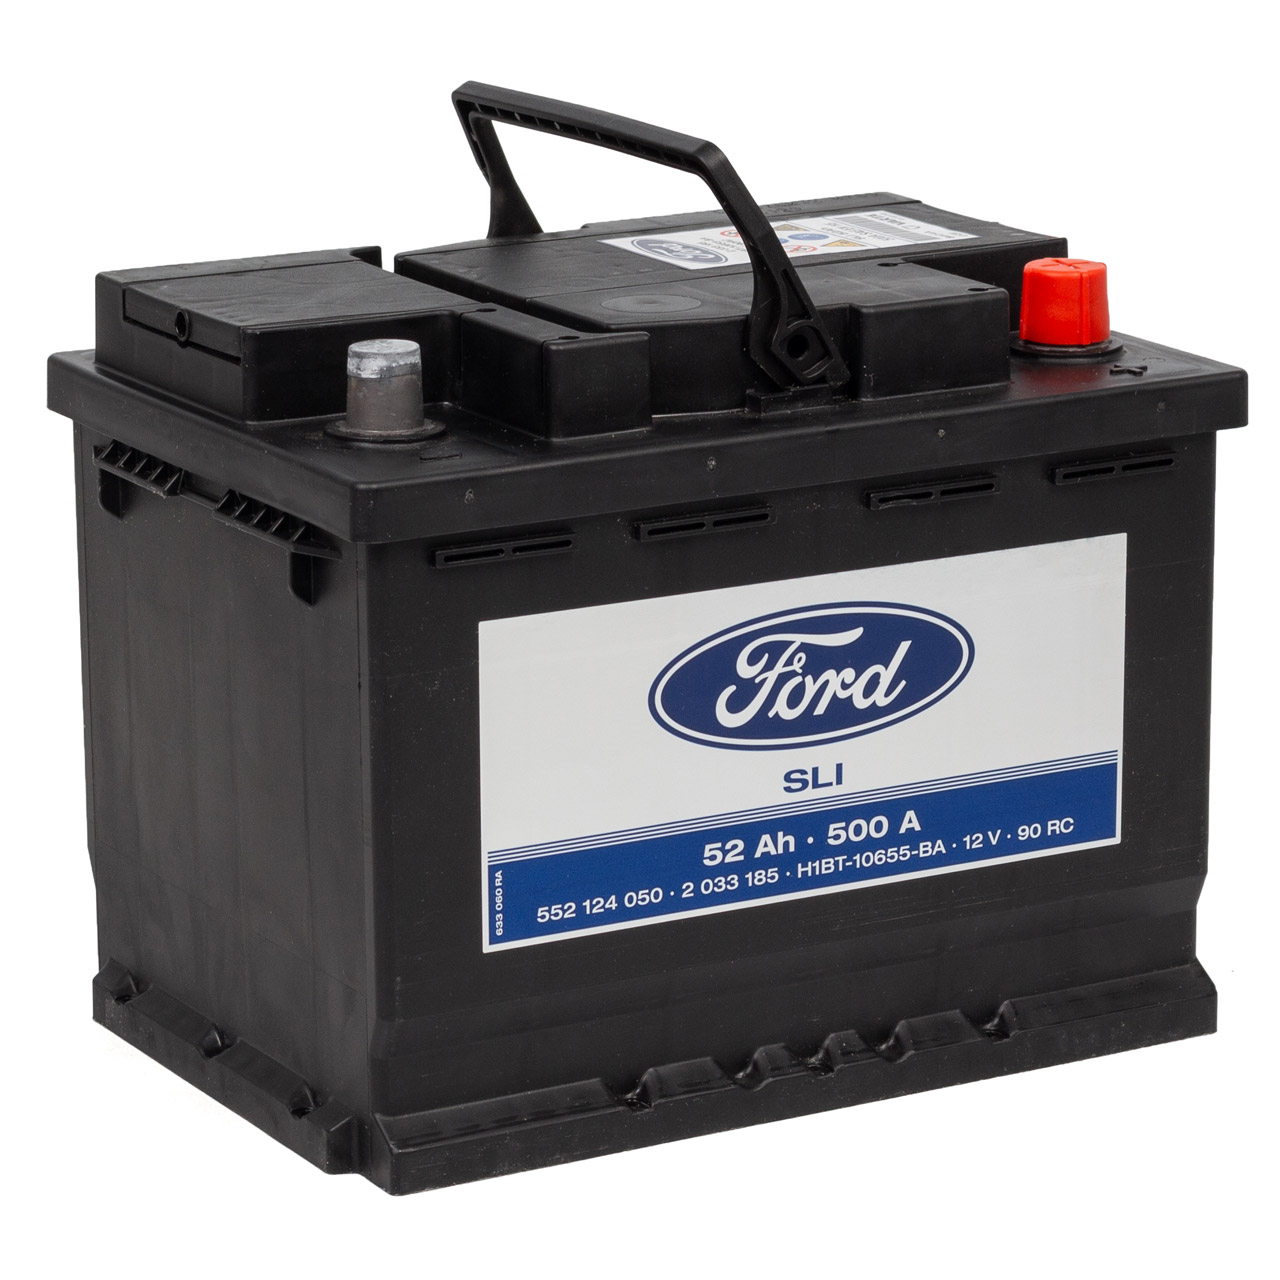 Original FORD Autobatterien - 2 033 185